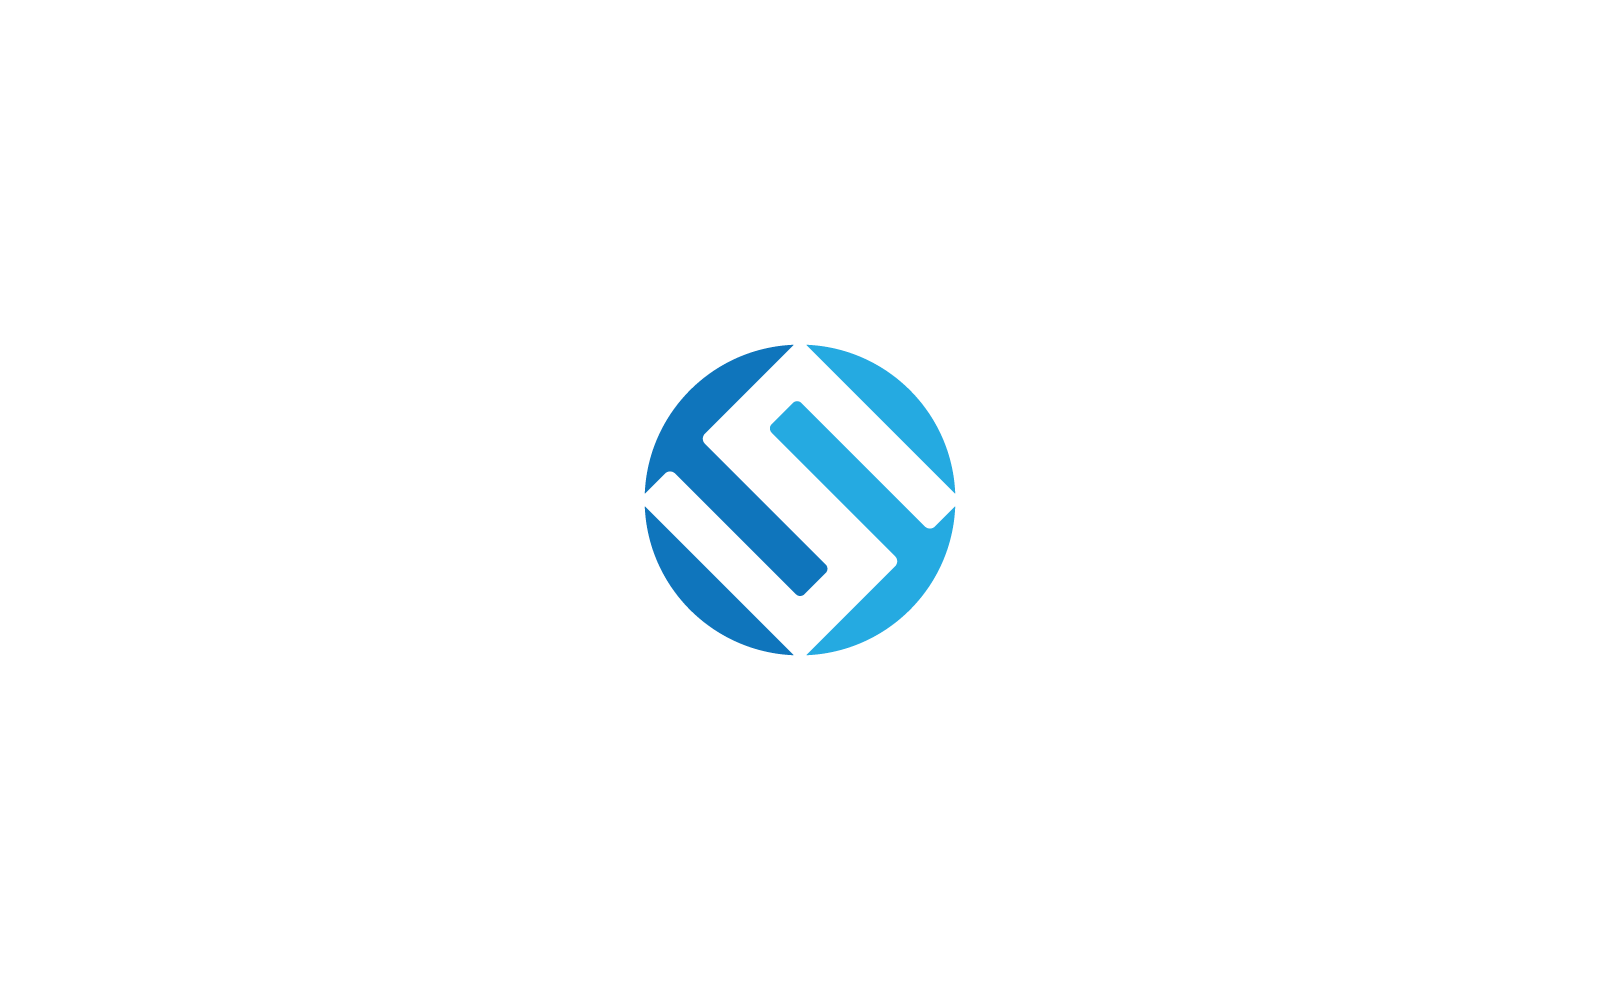 Business S letter logo flat design vector